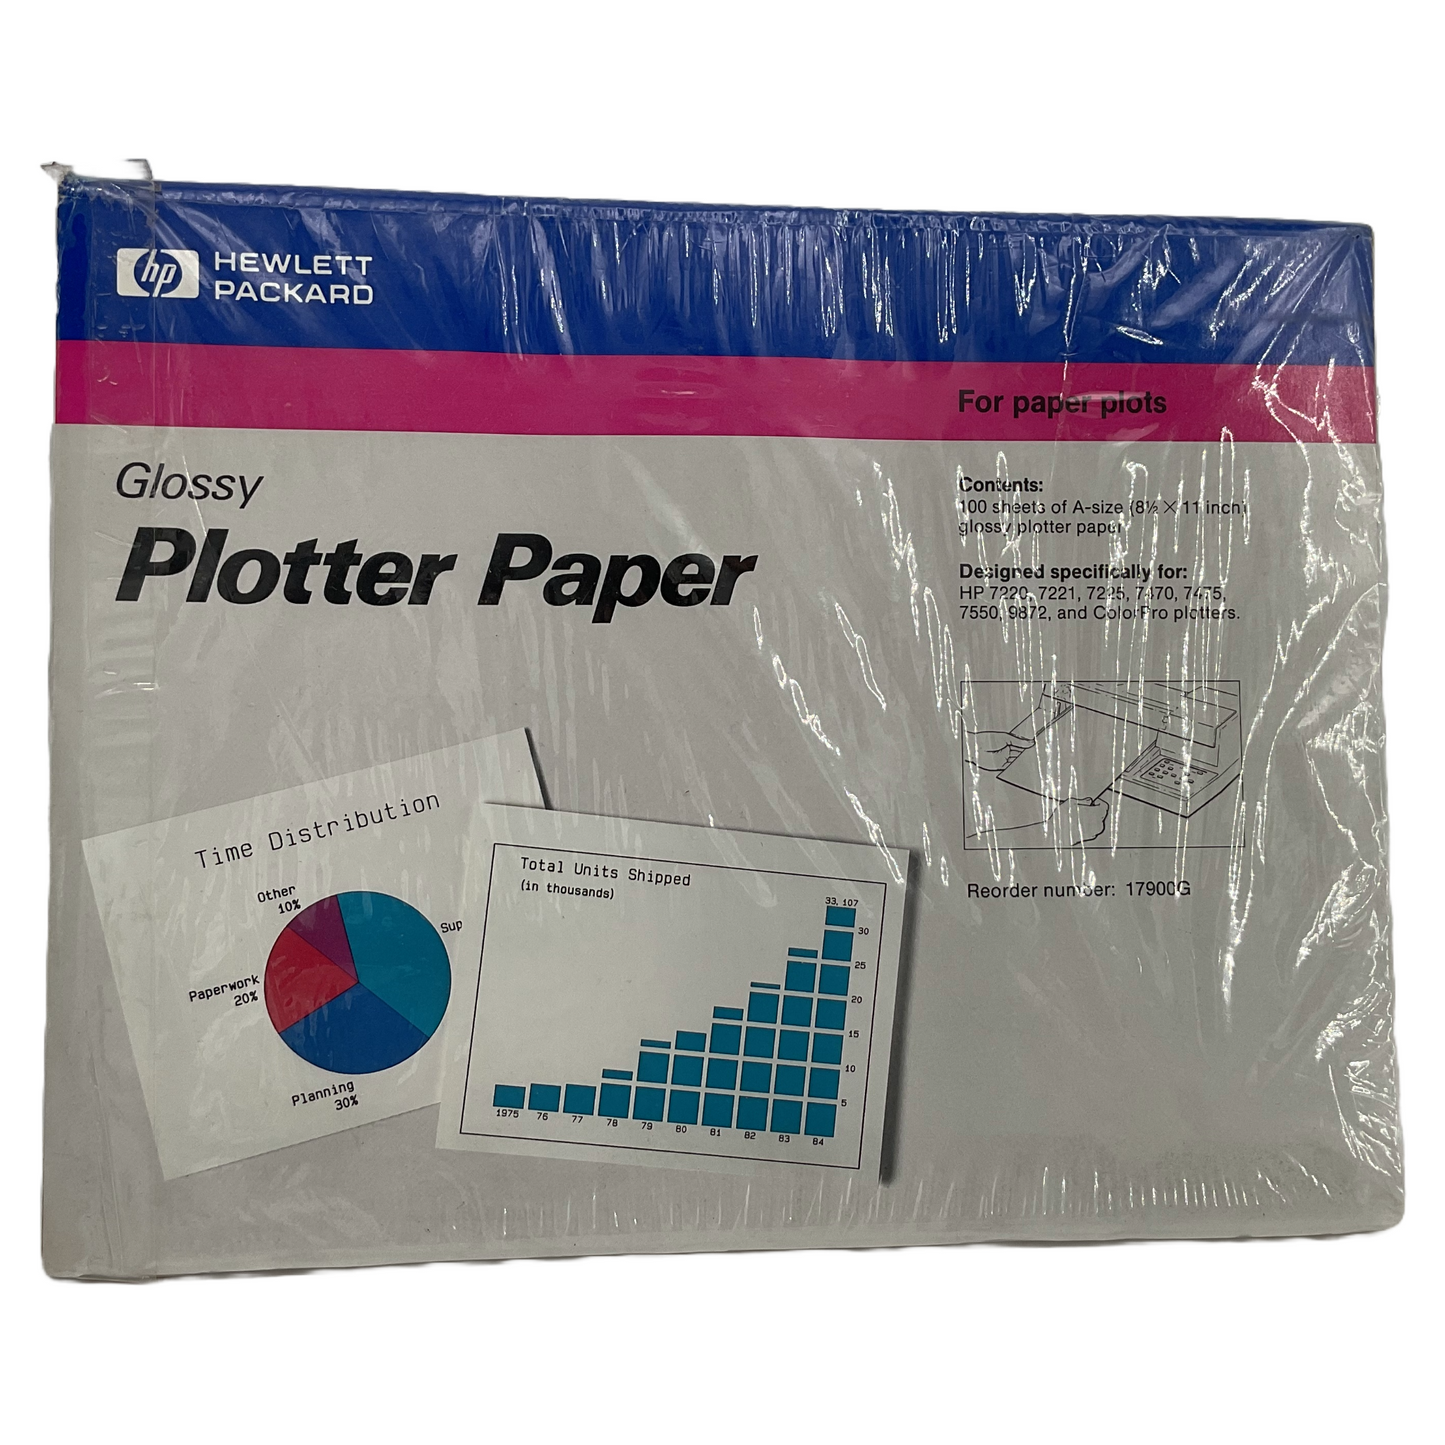 Glossy plotter paper by Hewlett Packard